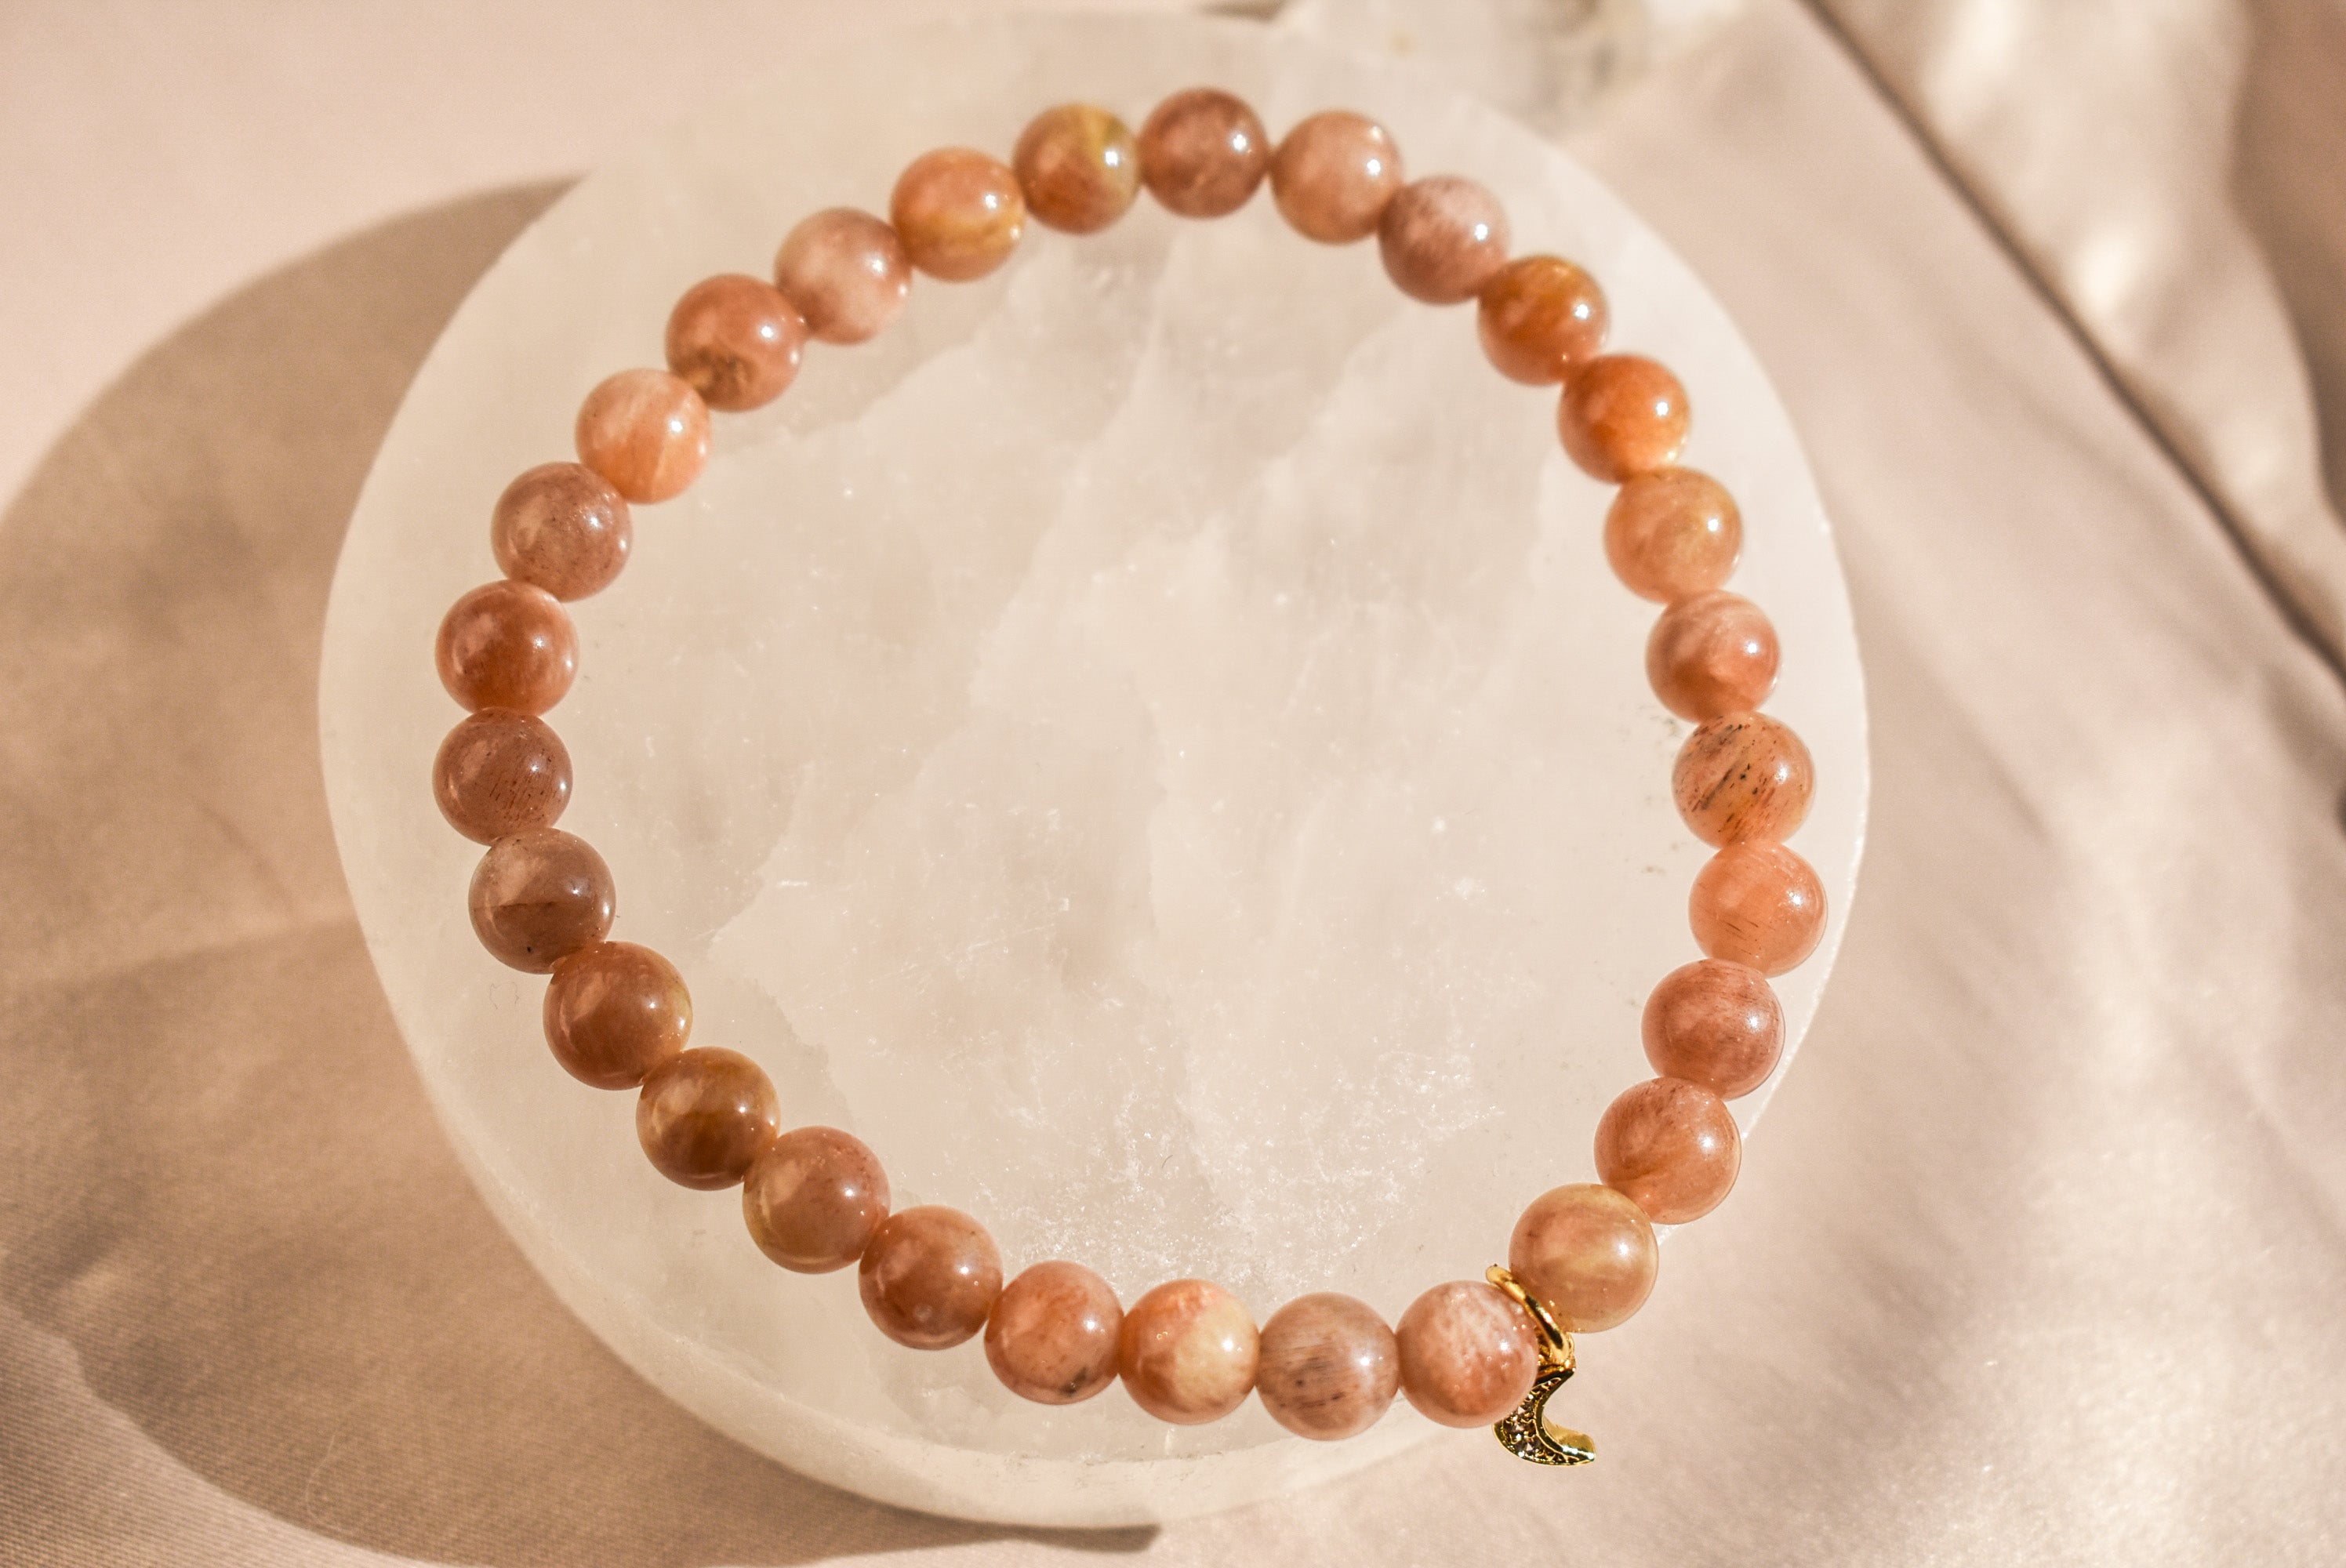 Peach Moonstone Bracelet